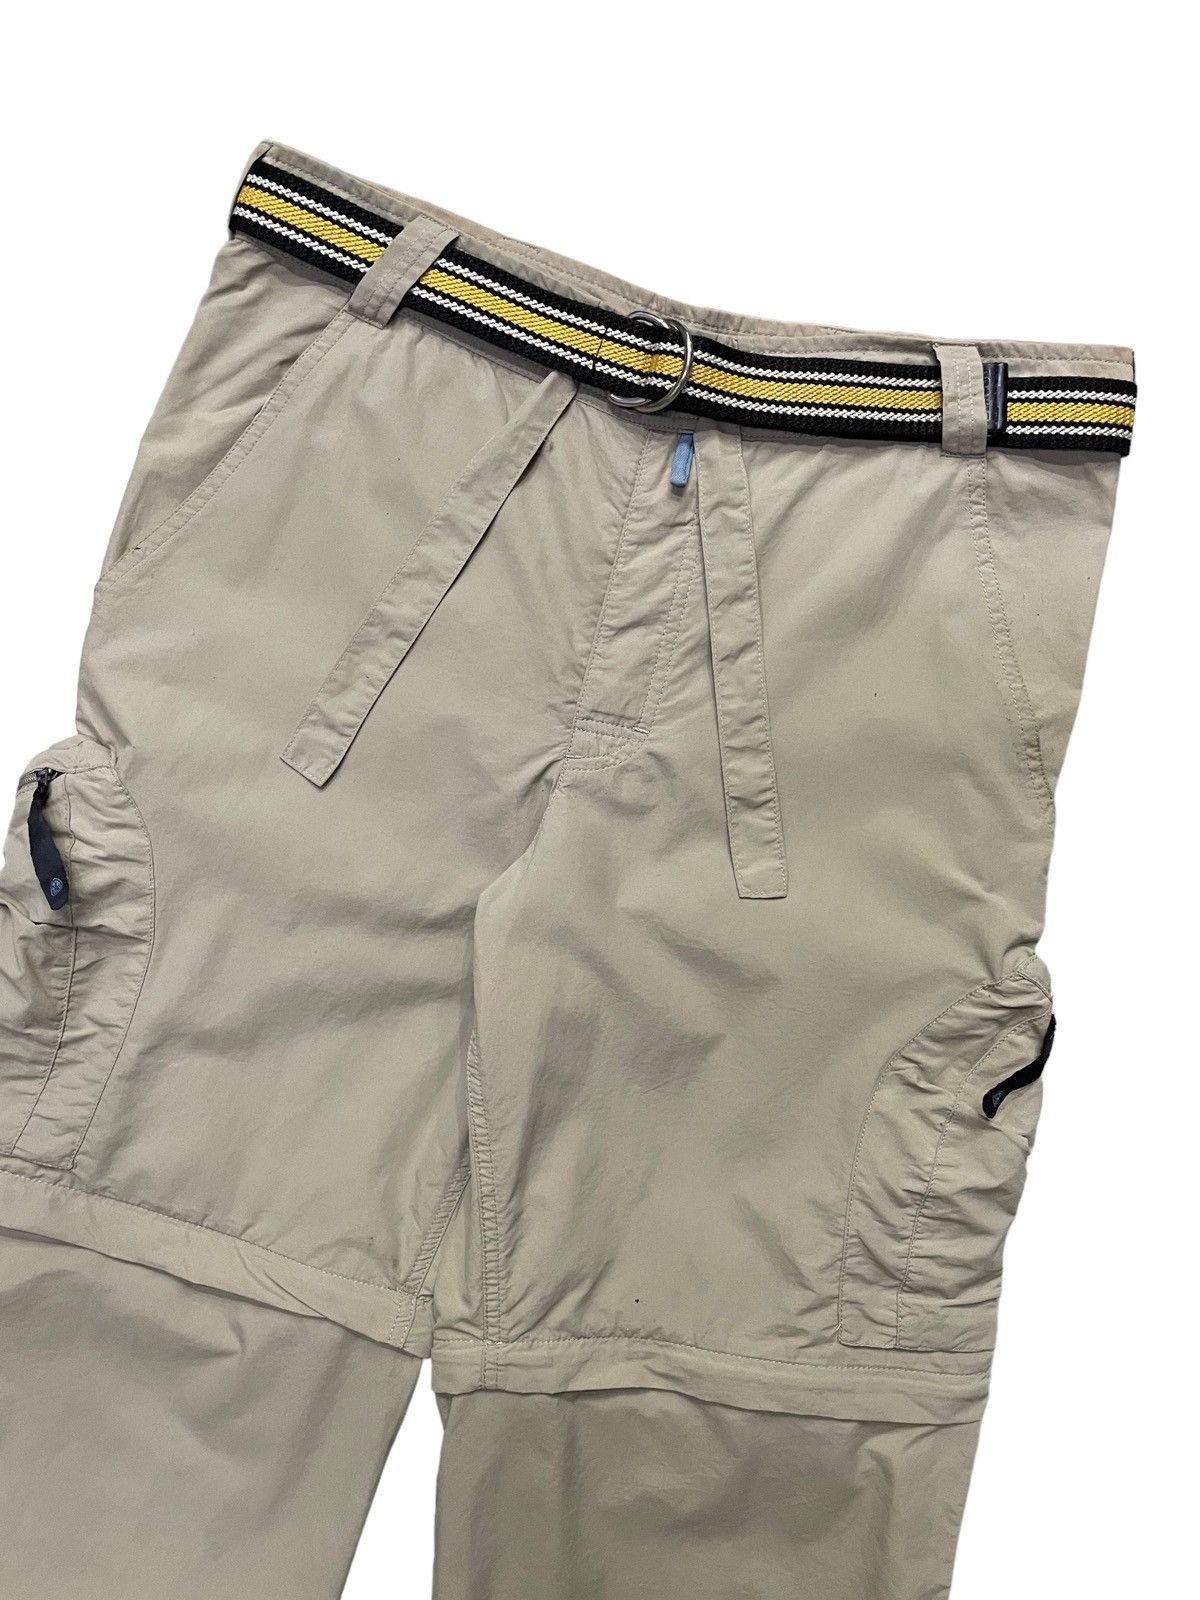 Vintage Vintage Nike ACG Convertible Trail Cargo Pants With Belt Size US 32 / EU 48 - 6 Thumbnail